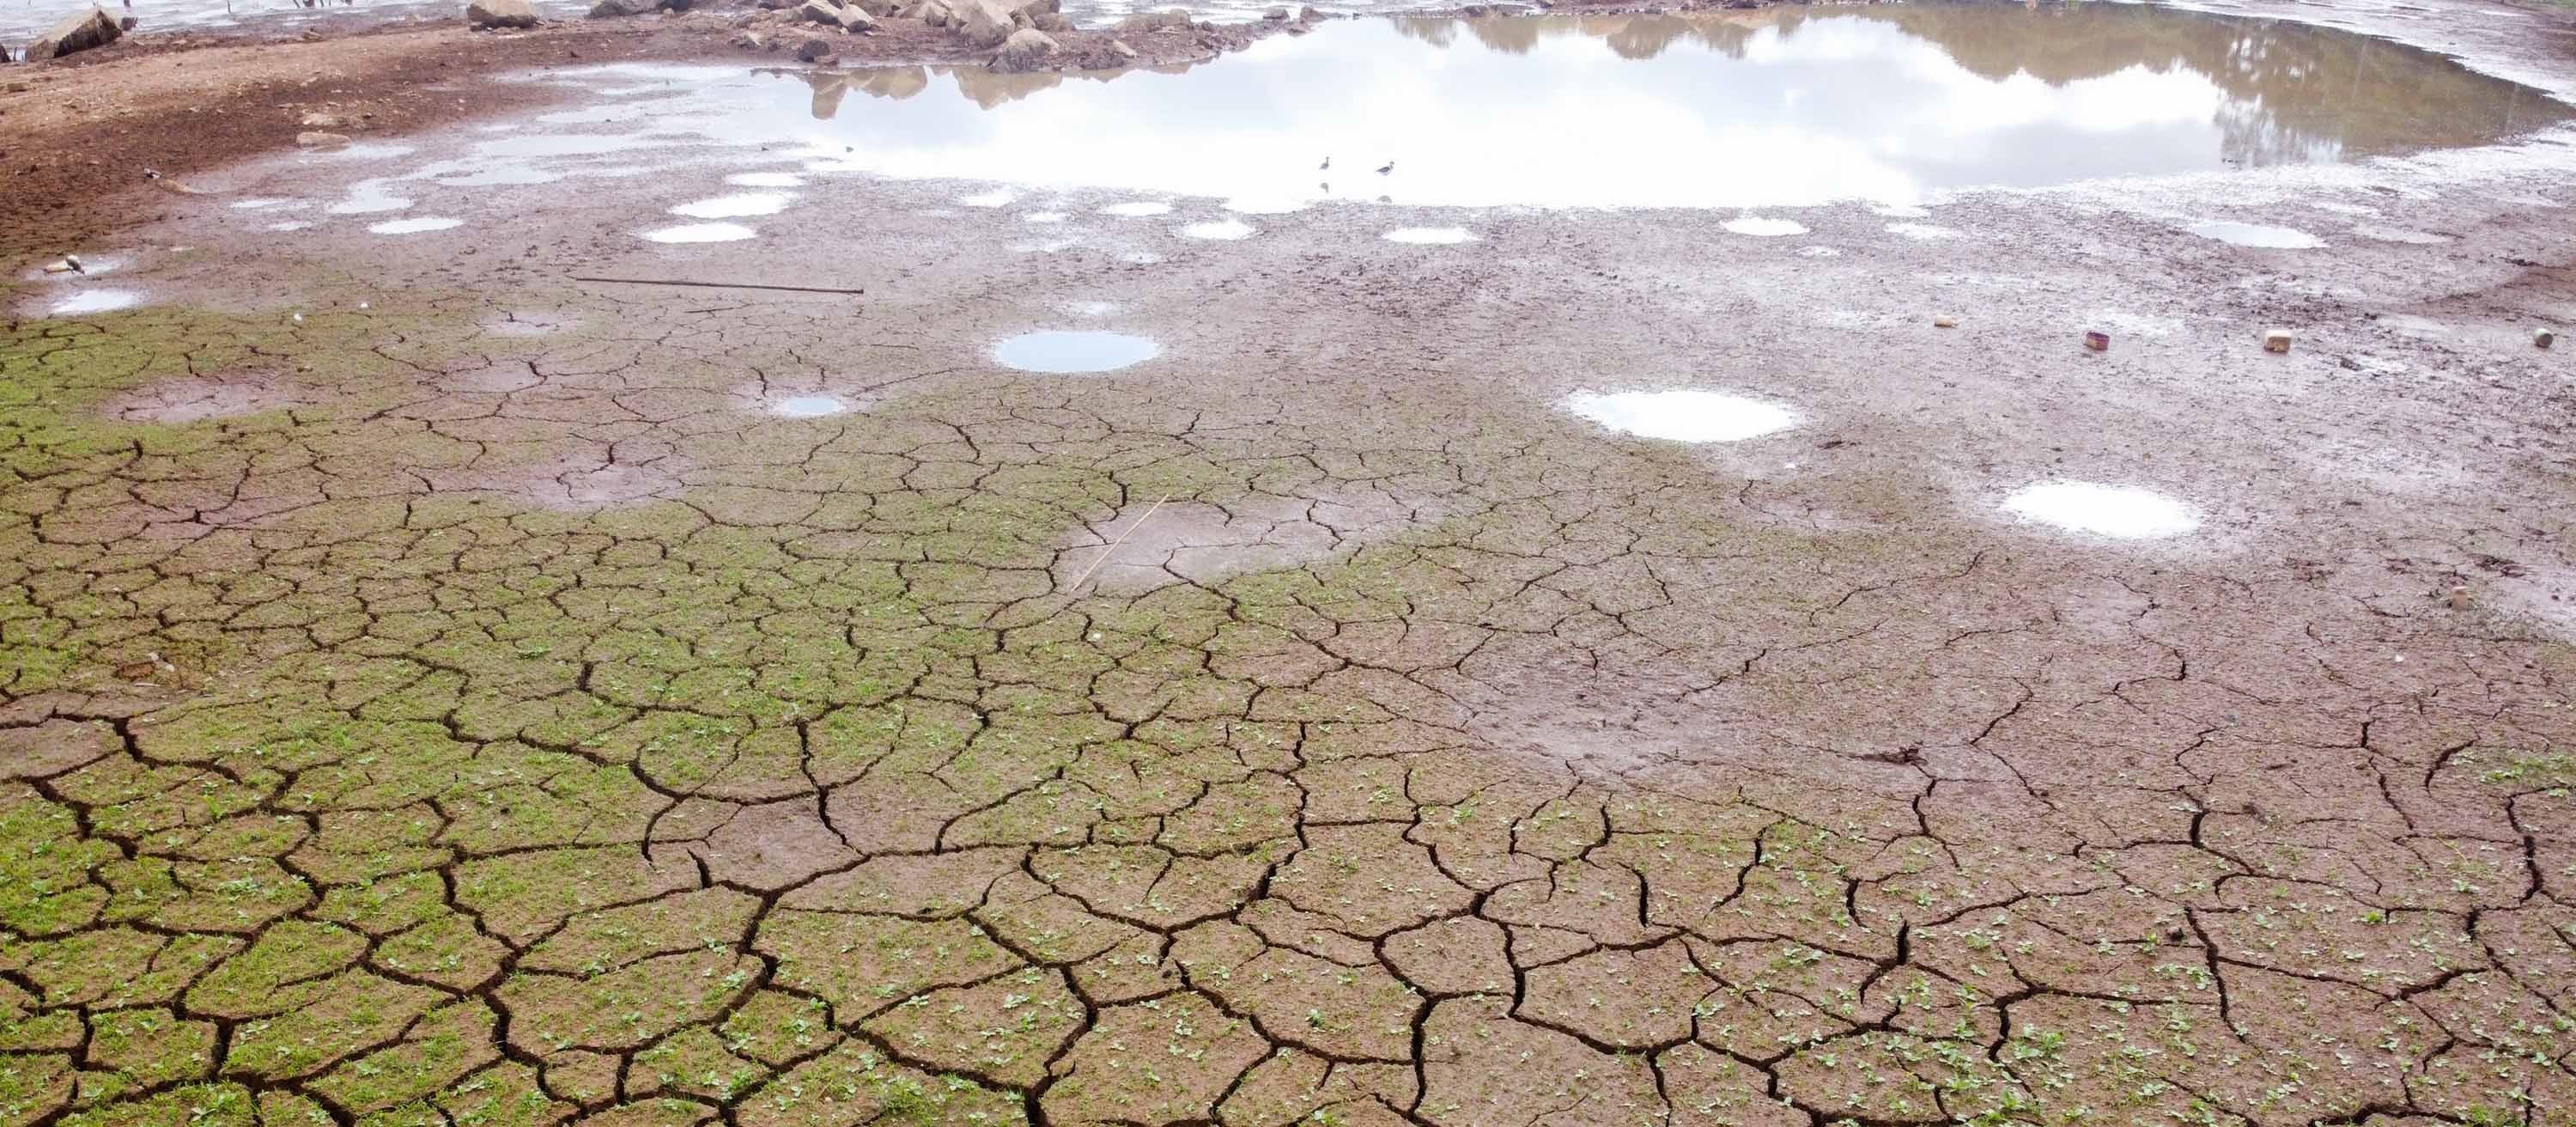 Crise hídrica amplia estimativa de perdas no setor agrícola